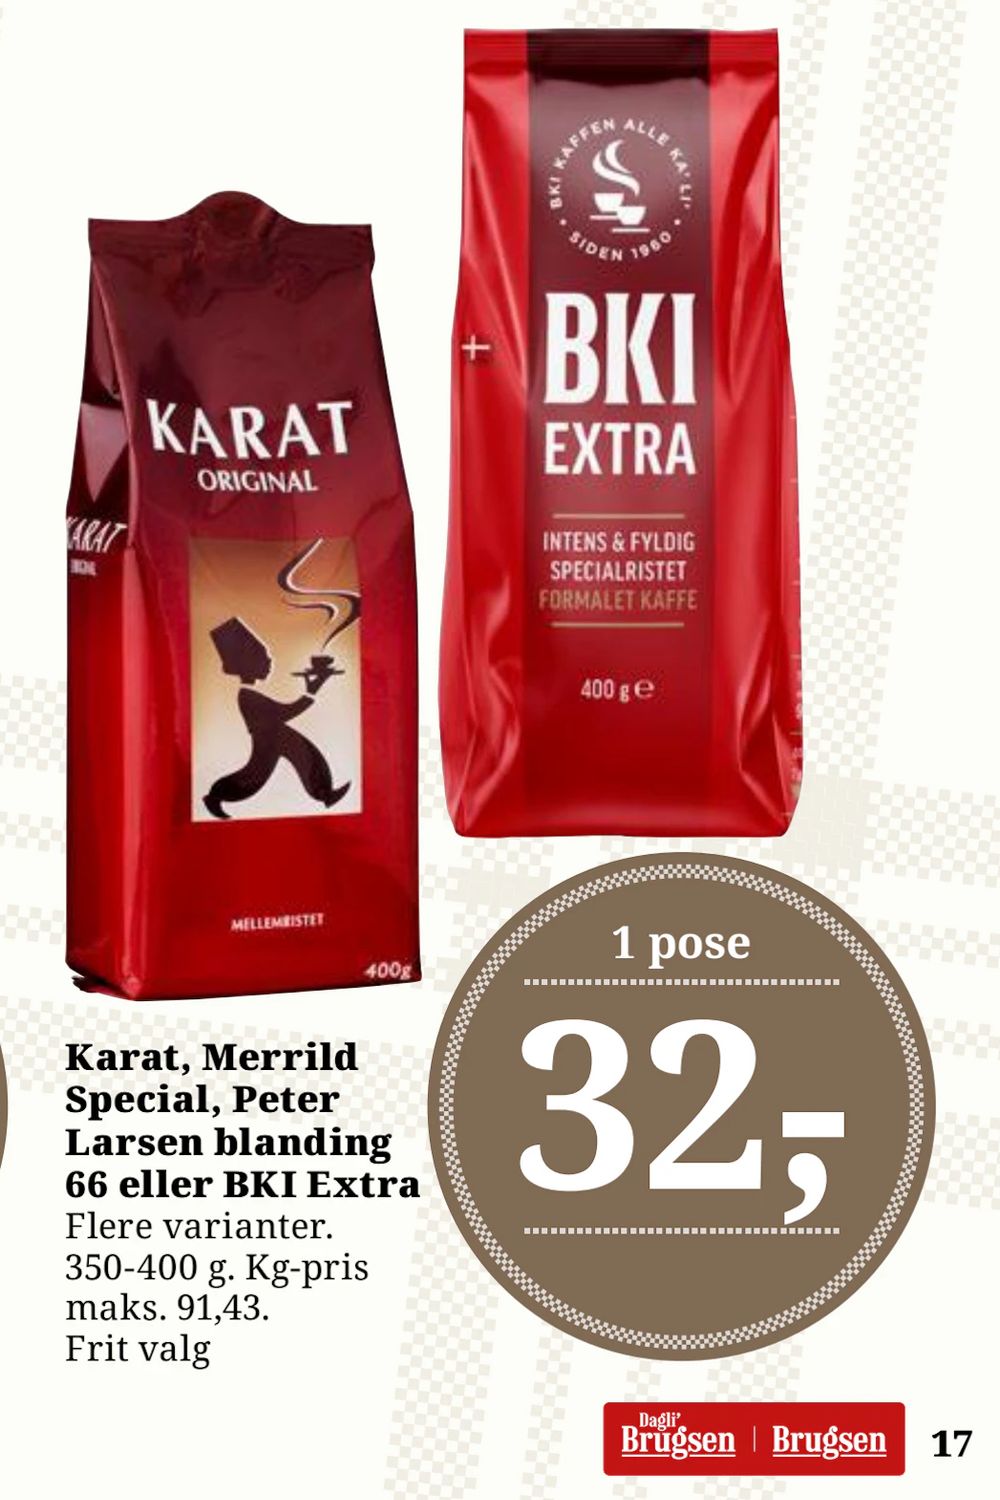 Tilbud på Karat, Merrild Special, Peter Larsen blanding 66 eller BKI Extra fra Dagli'Brugsen til 32 kr.